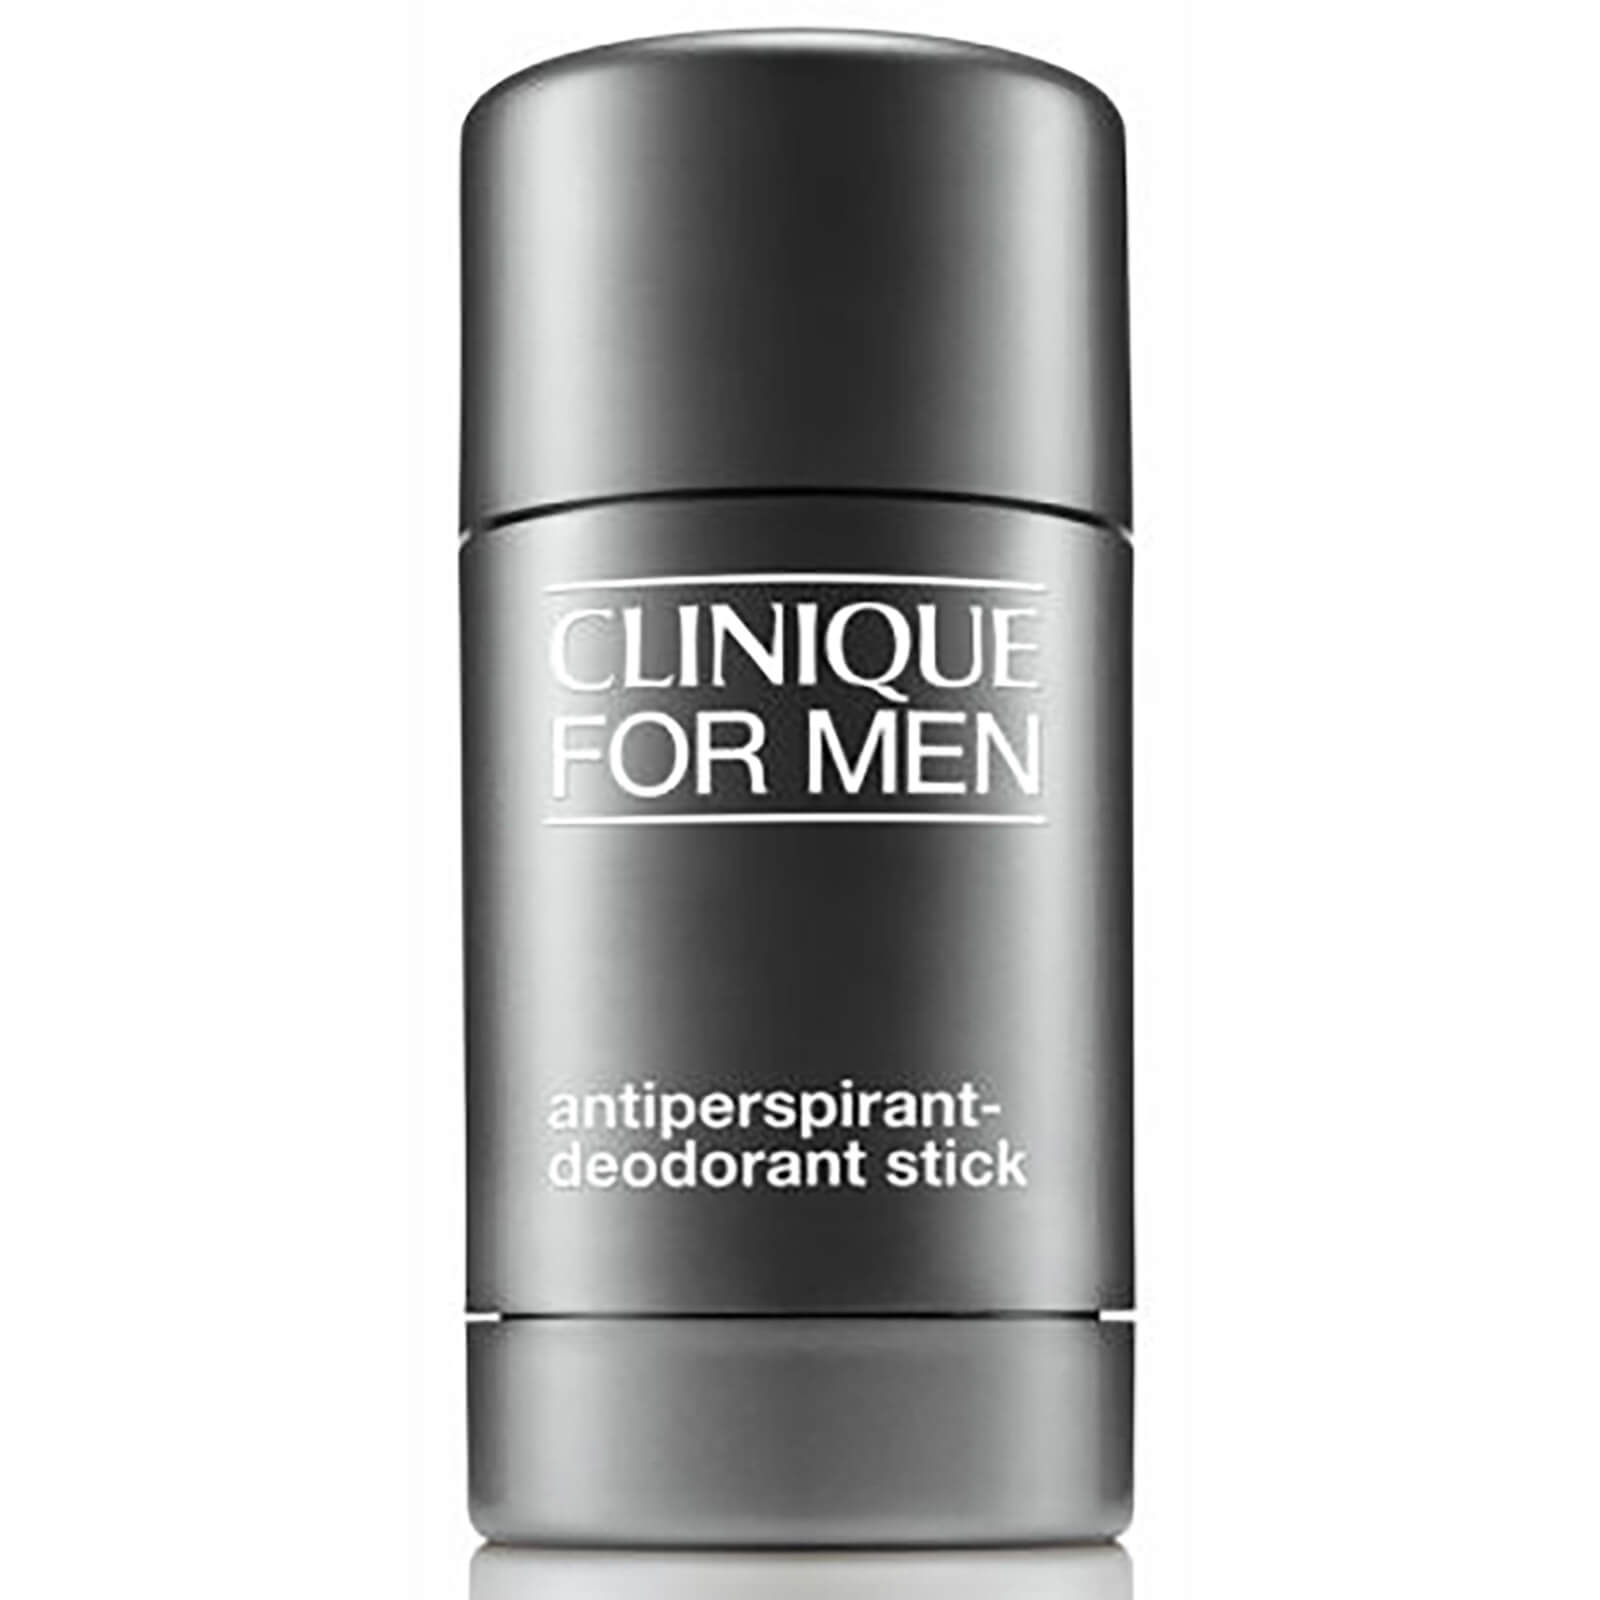 Clinique for Men Anti-Perspirant Deodorant Stick 75g